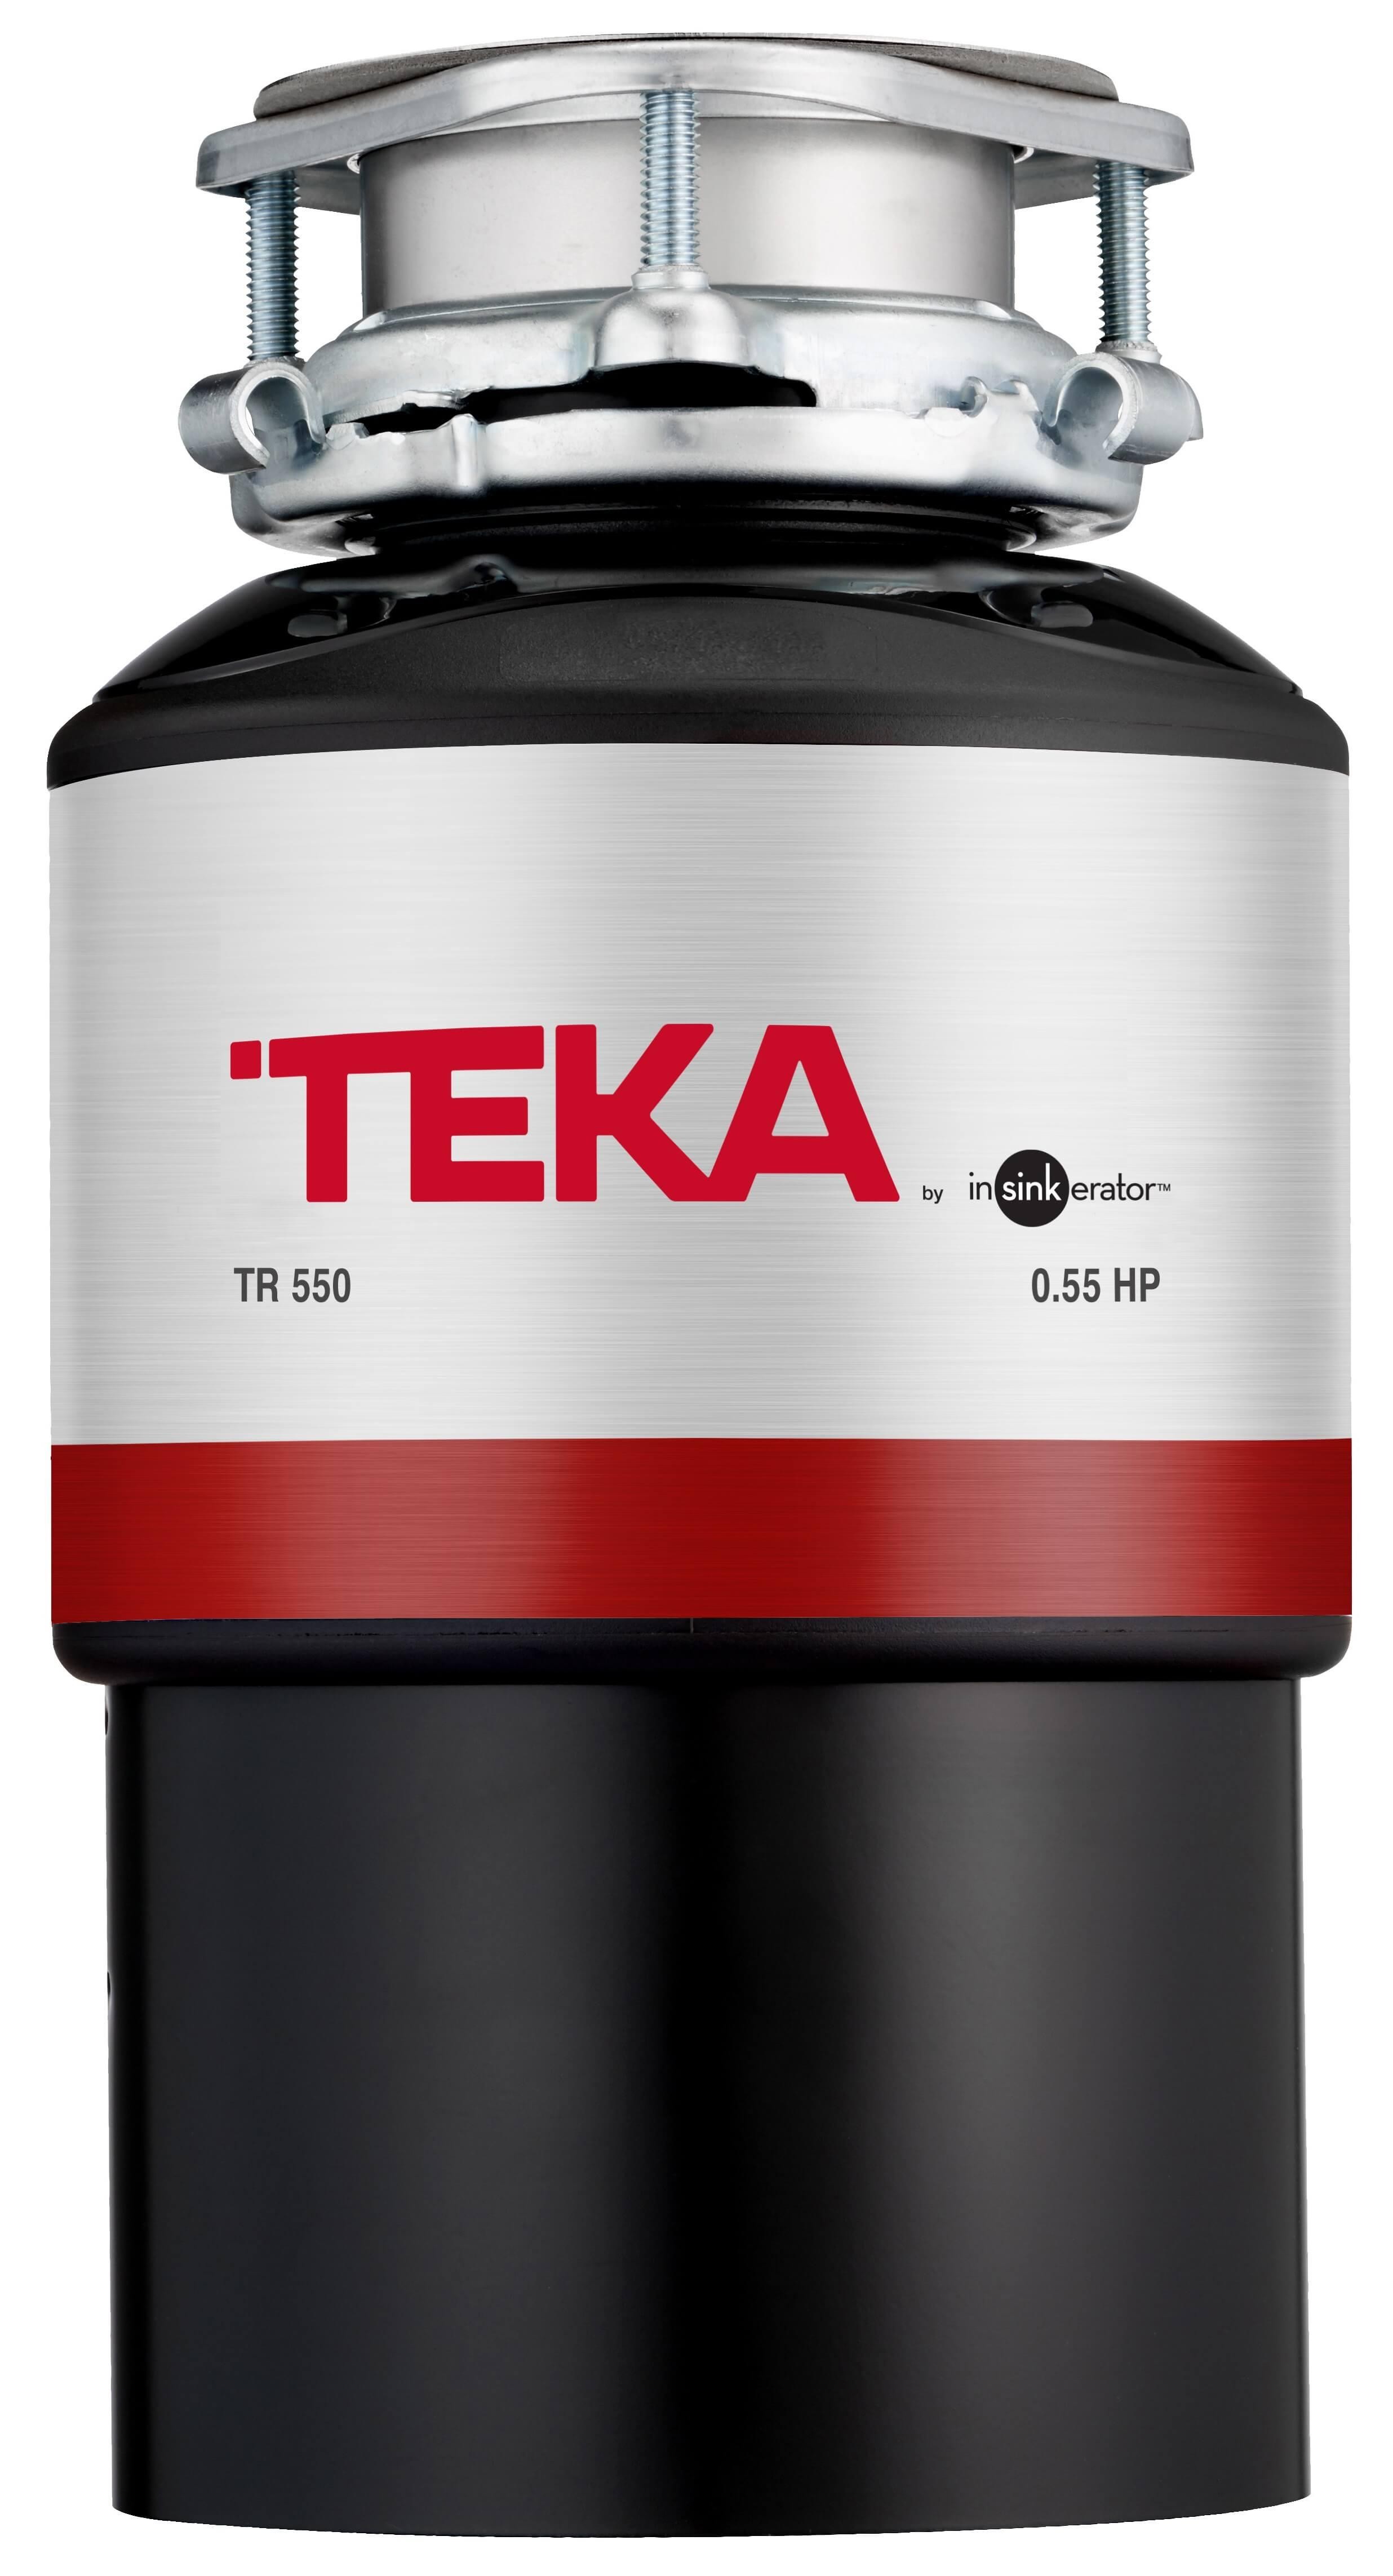 Характеристики диспоузер мощностью 0.55 л.с. Teka TR 550